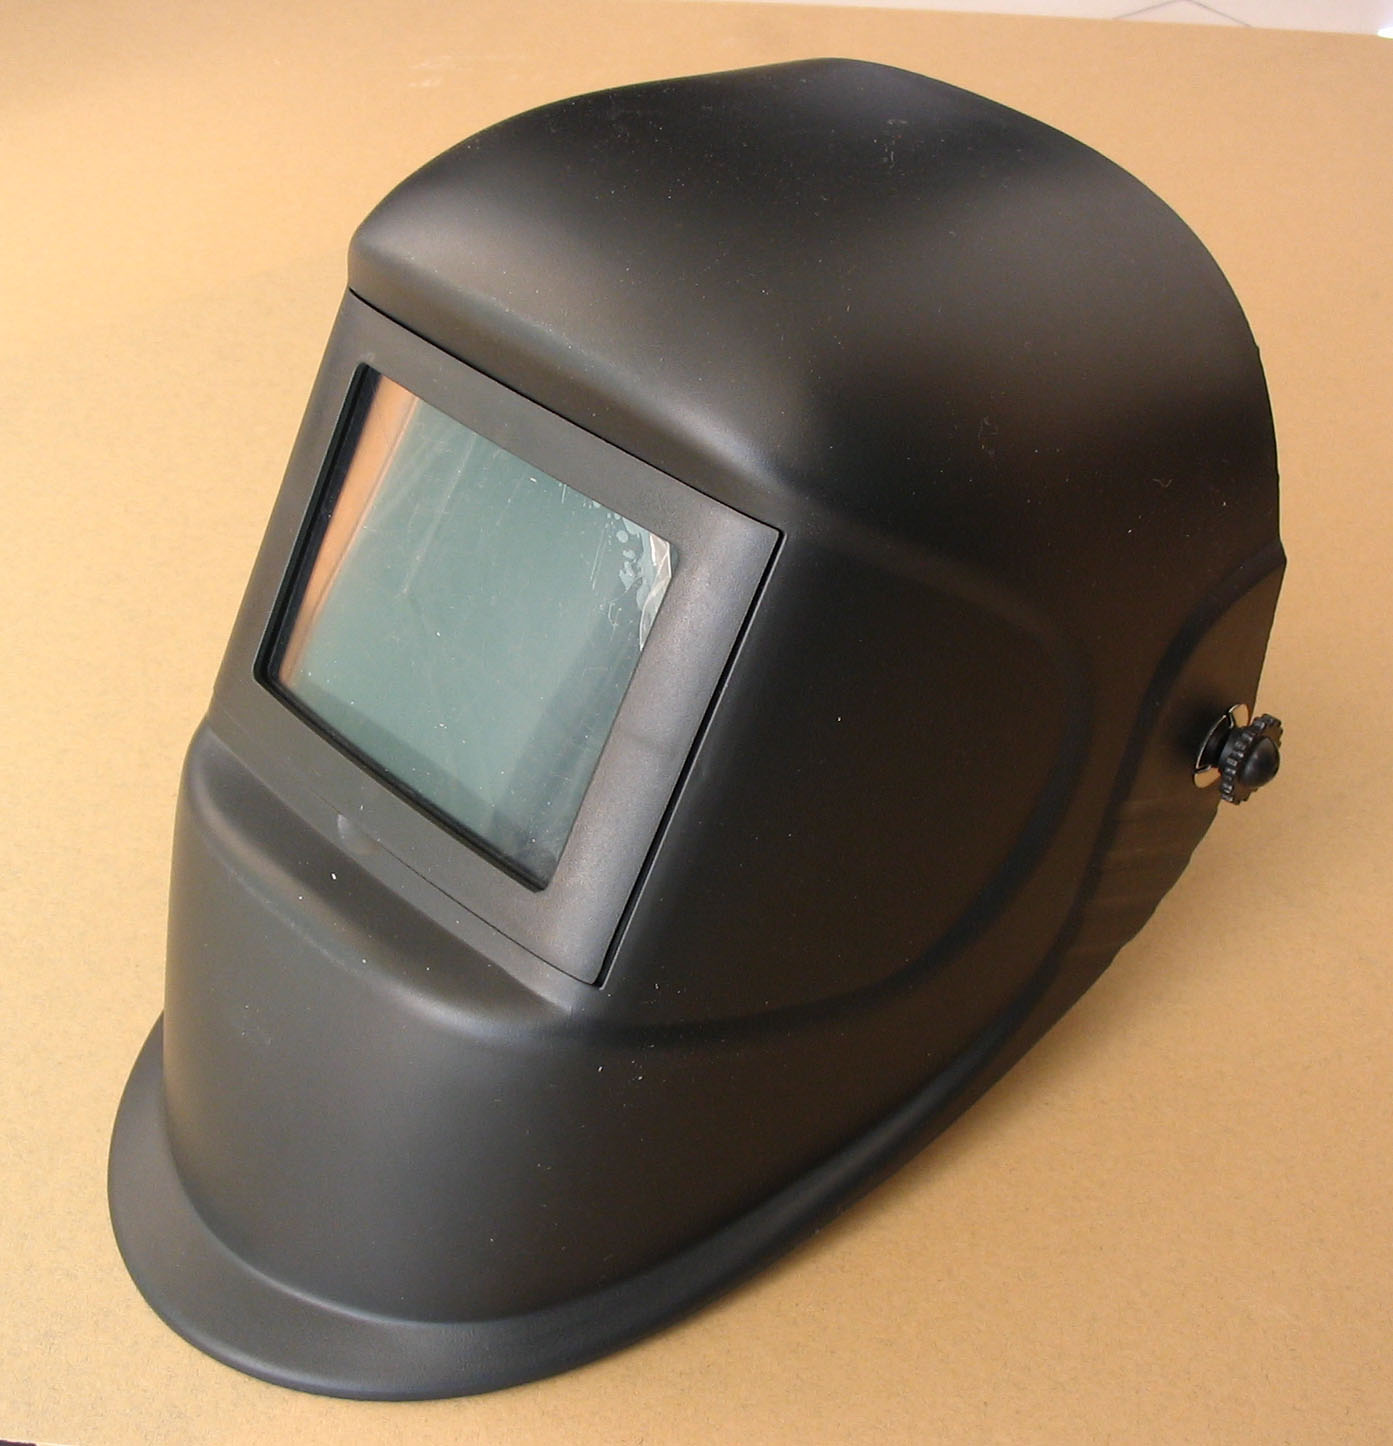 auto darkening welding helmet